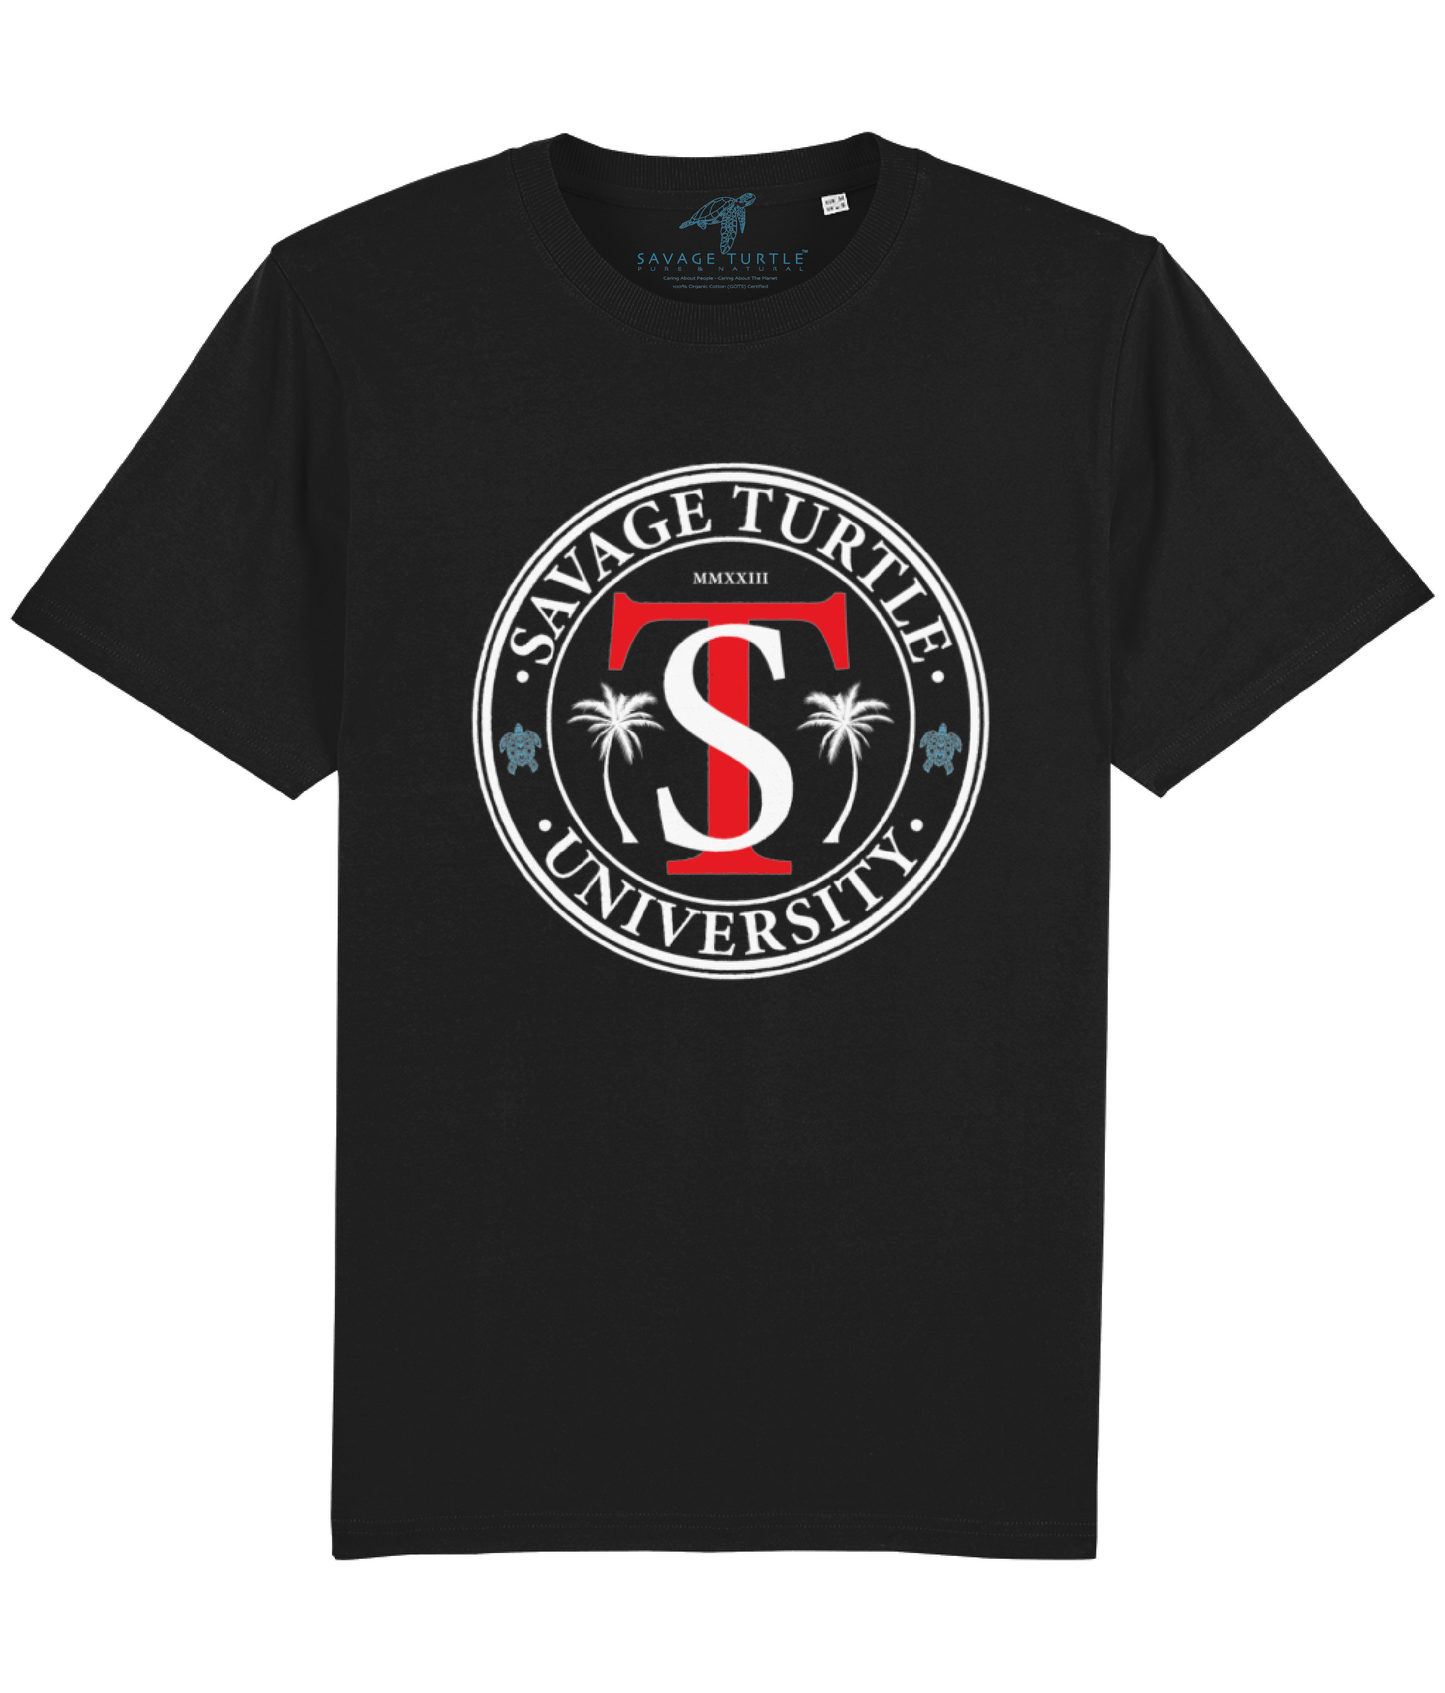 T-shirt Black Savage Turtle University